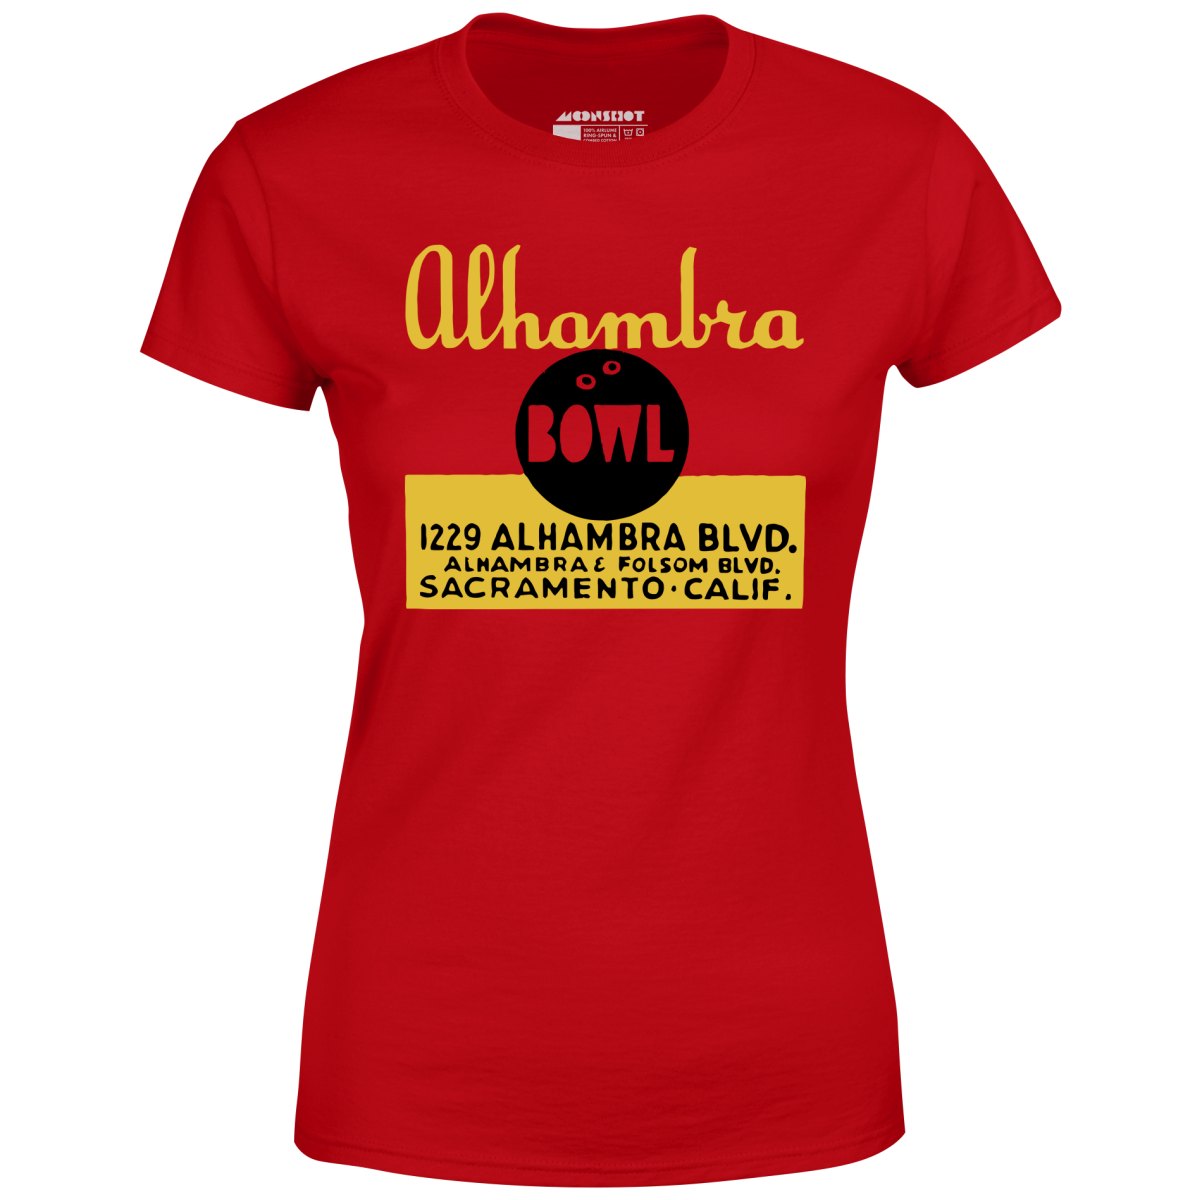 Alhambra Bowl - Sacramento, CA - Vintage Bowling Alley - Women's T-Shirt